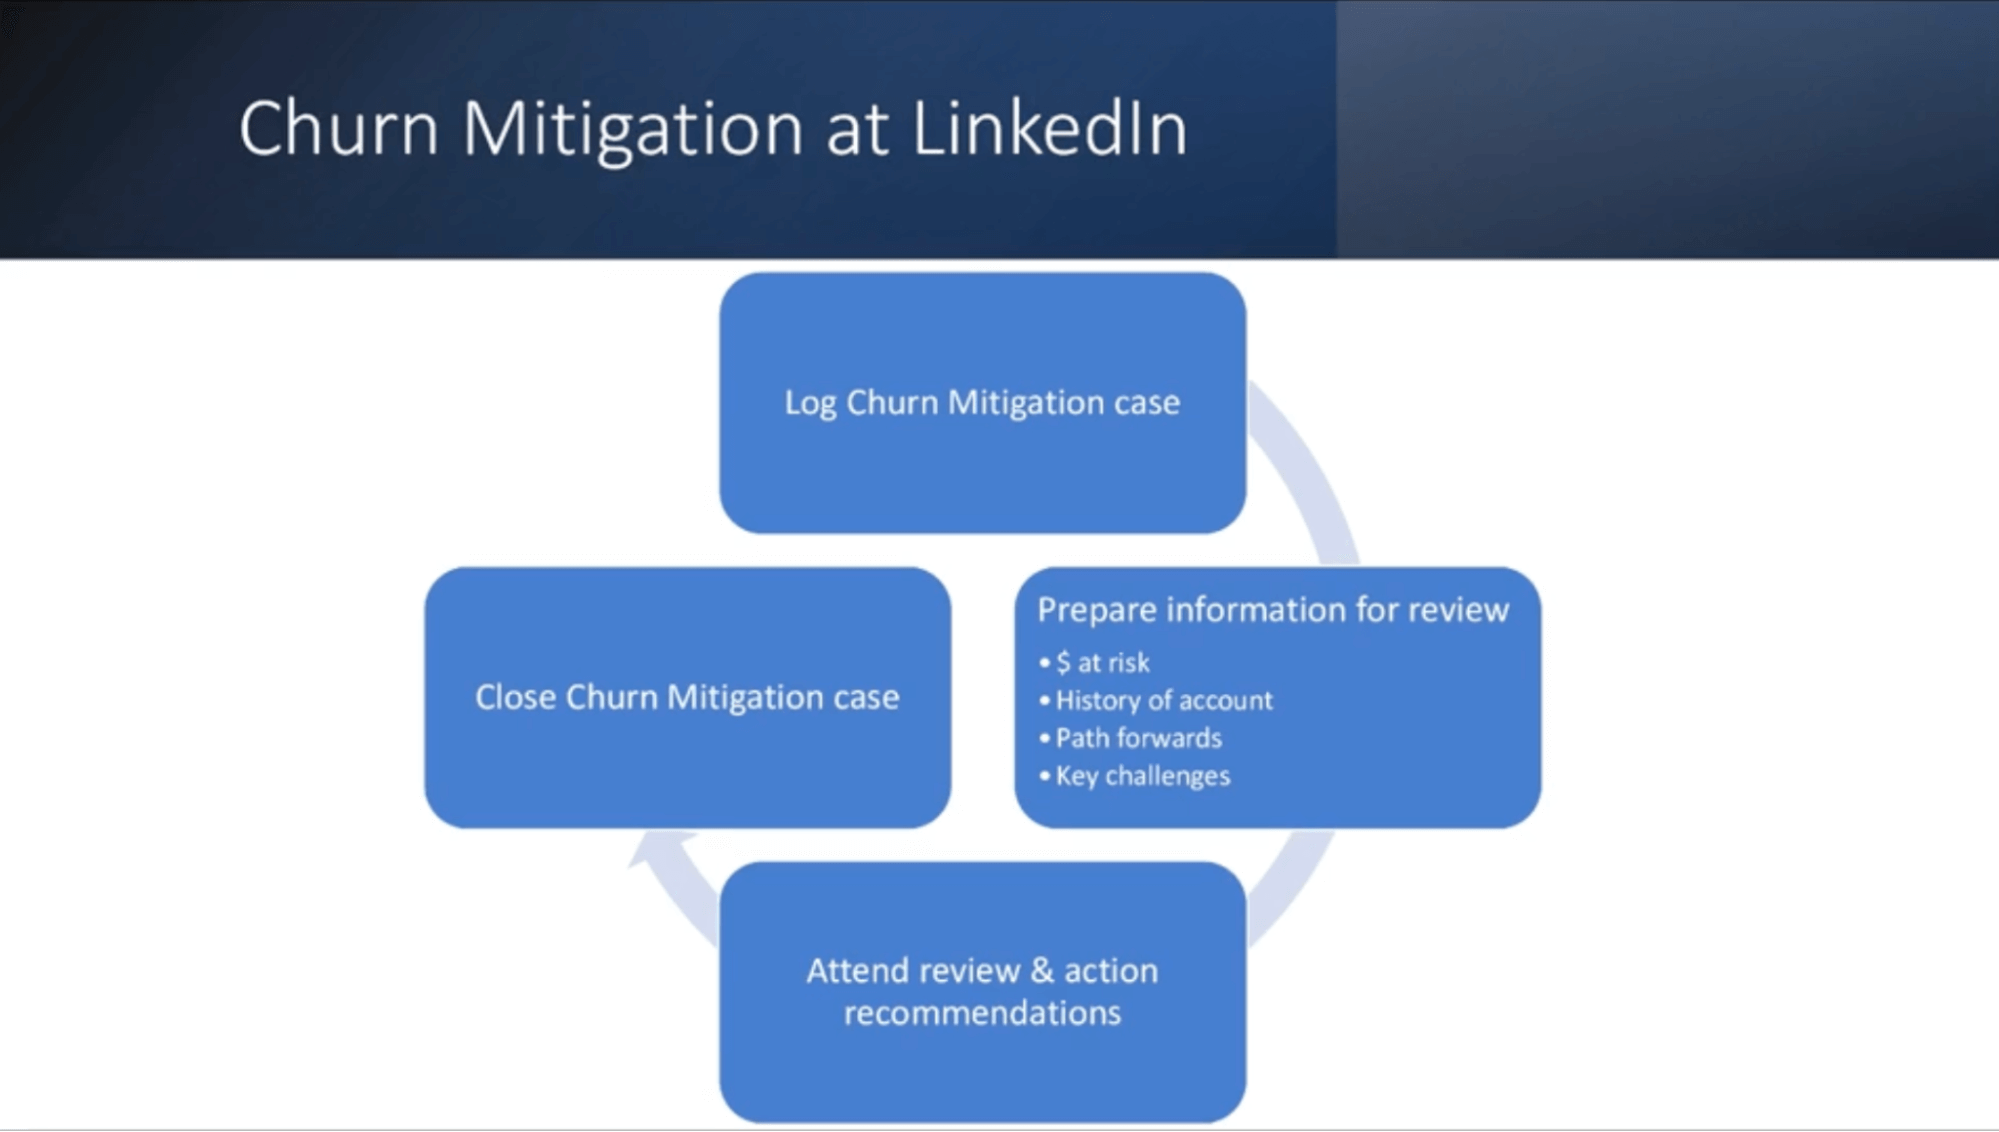 Churn mitigation at LinkedIn